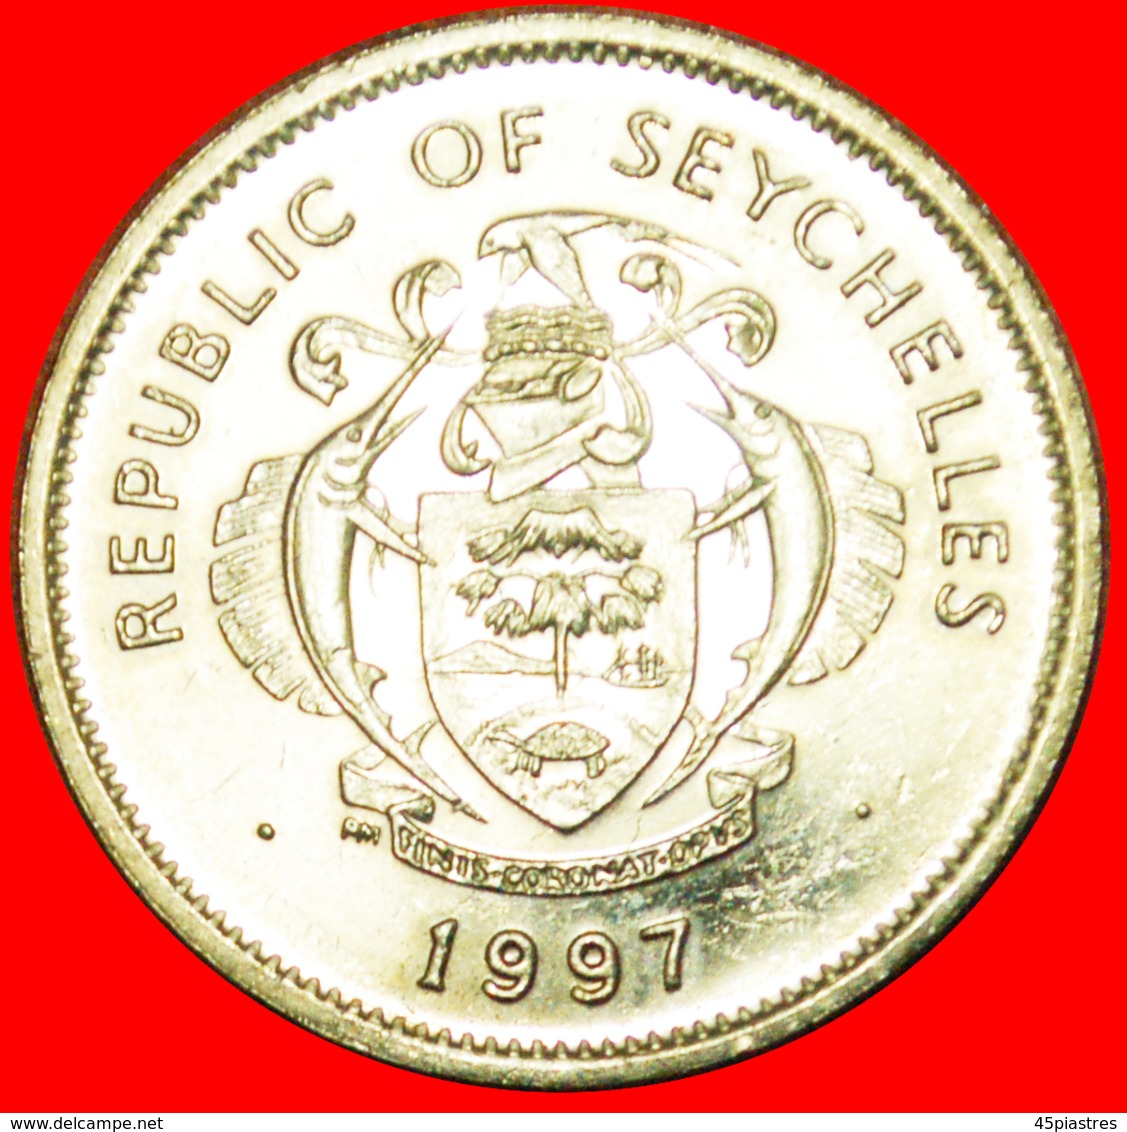 # GREAT BRITAIN: SEYCHELLES ★ 1 RUPEE 1997 PM TRITON SHELL! LOW START ★ NO RESERVE! - Seychellen